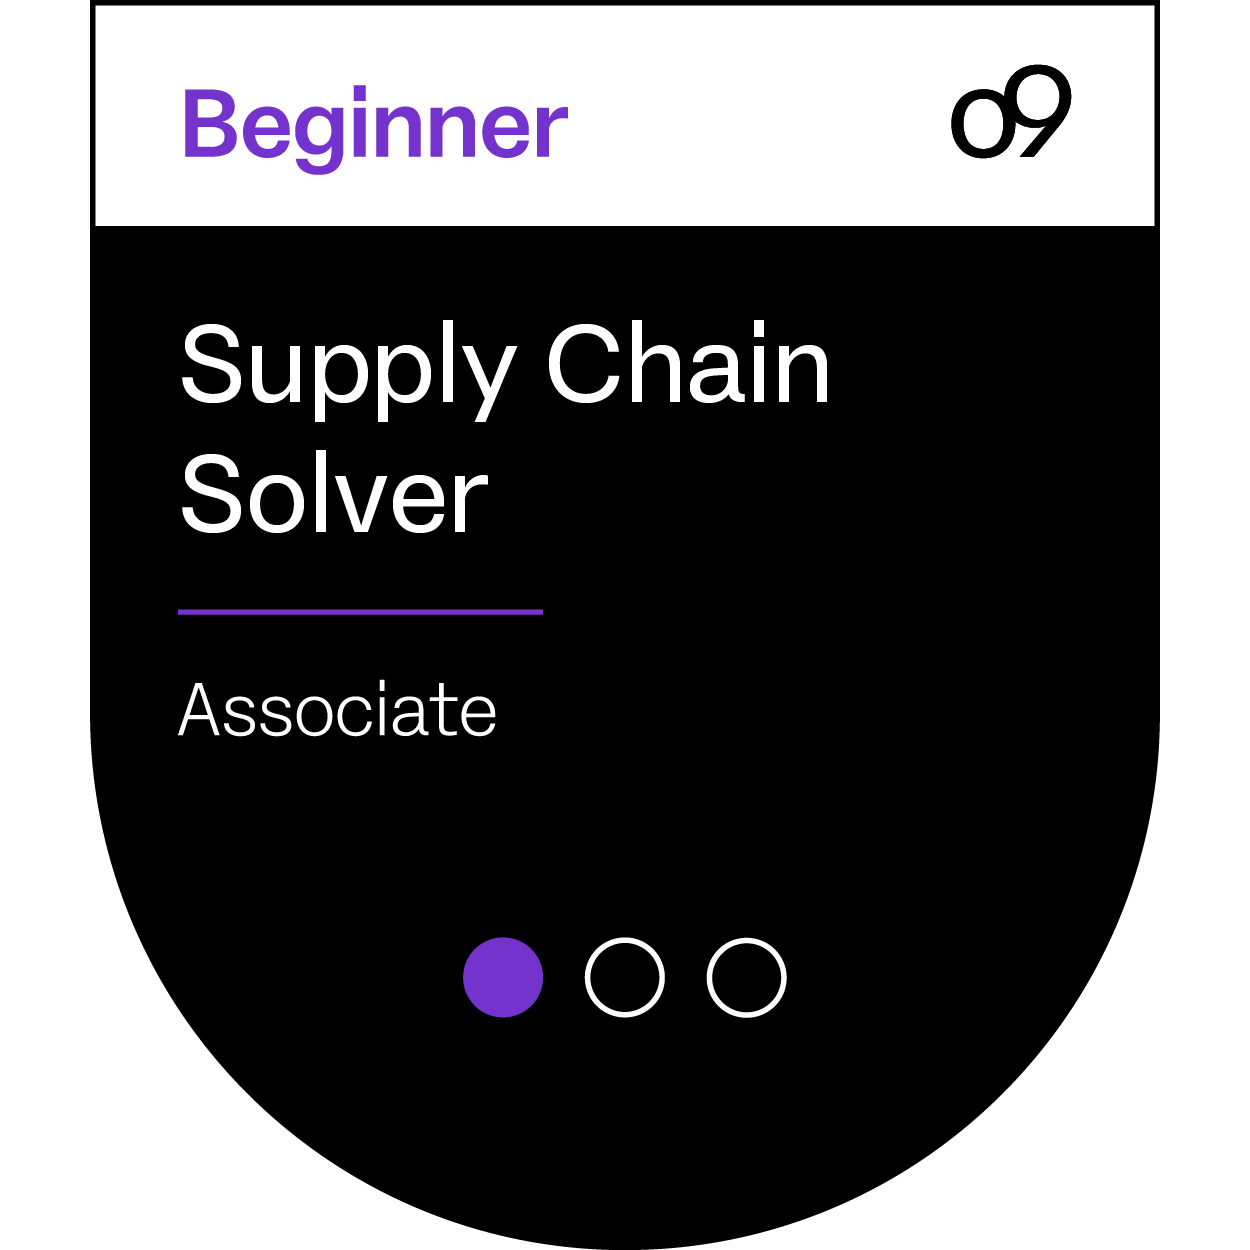 O9 supply chain solver associate certificate